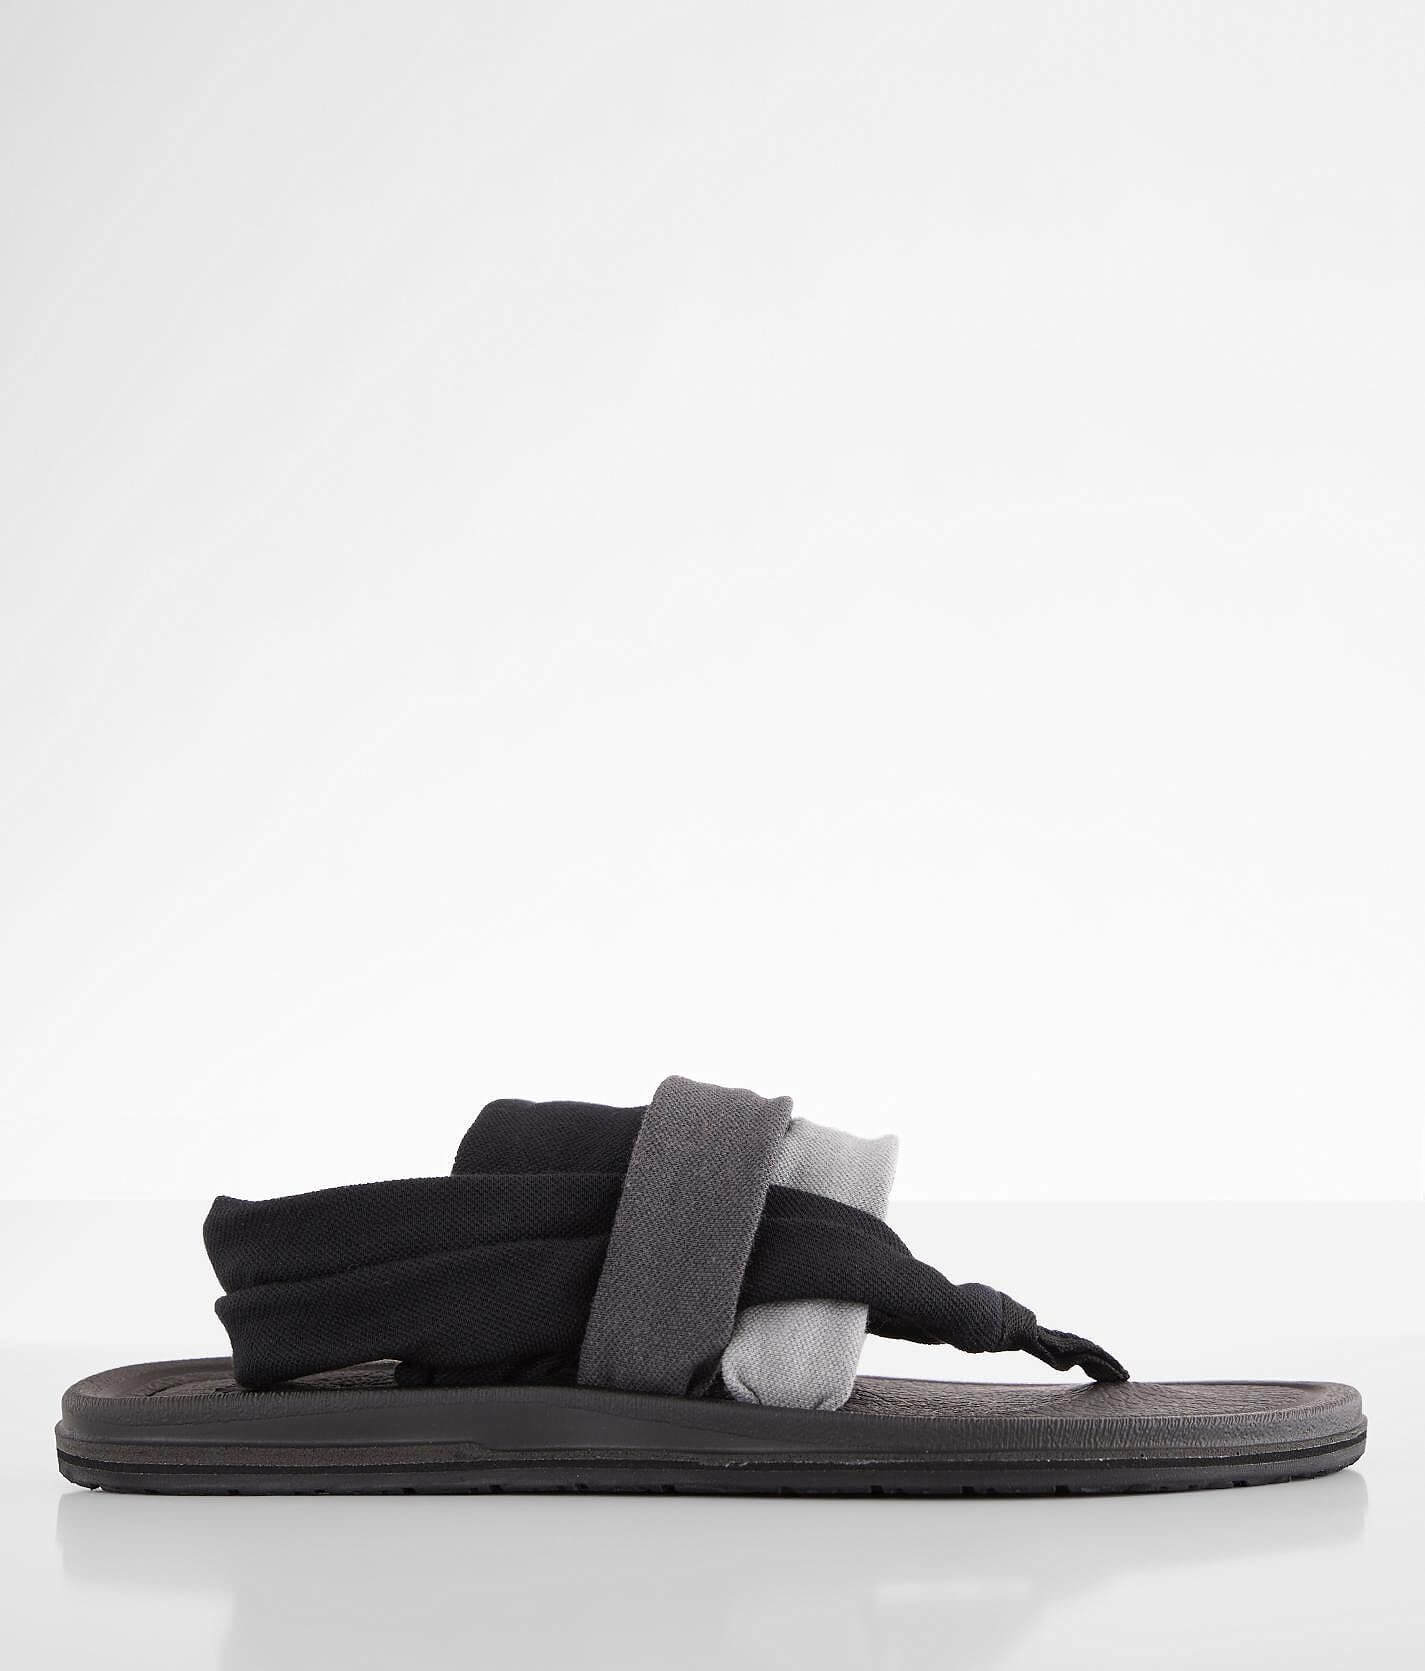 Sanuk Yoga Sling 3 Flip - Women's Shoes in Gradient Grey Black